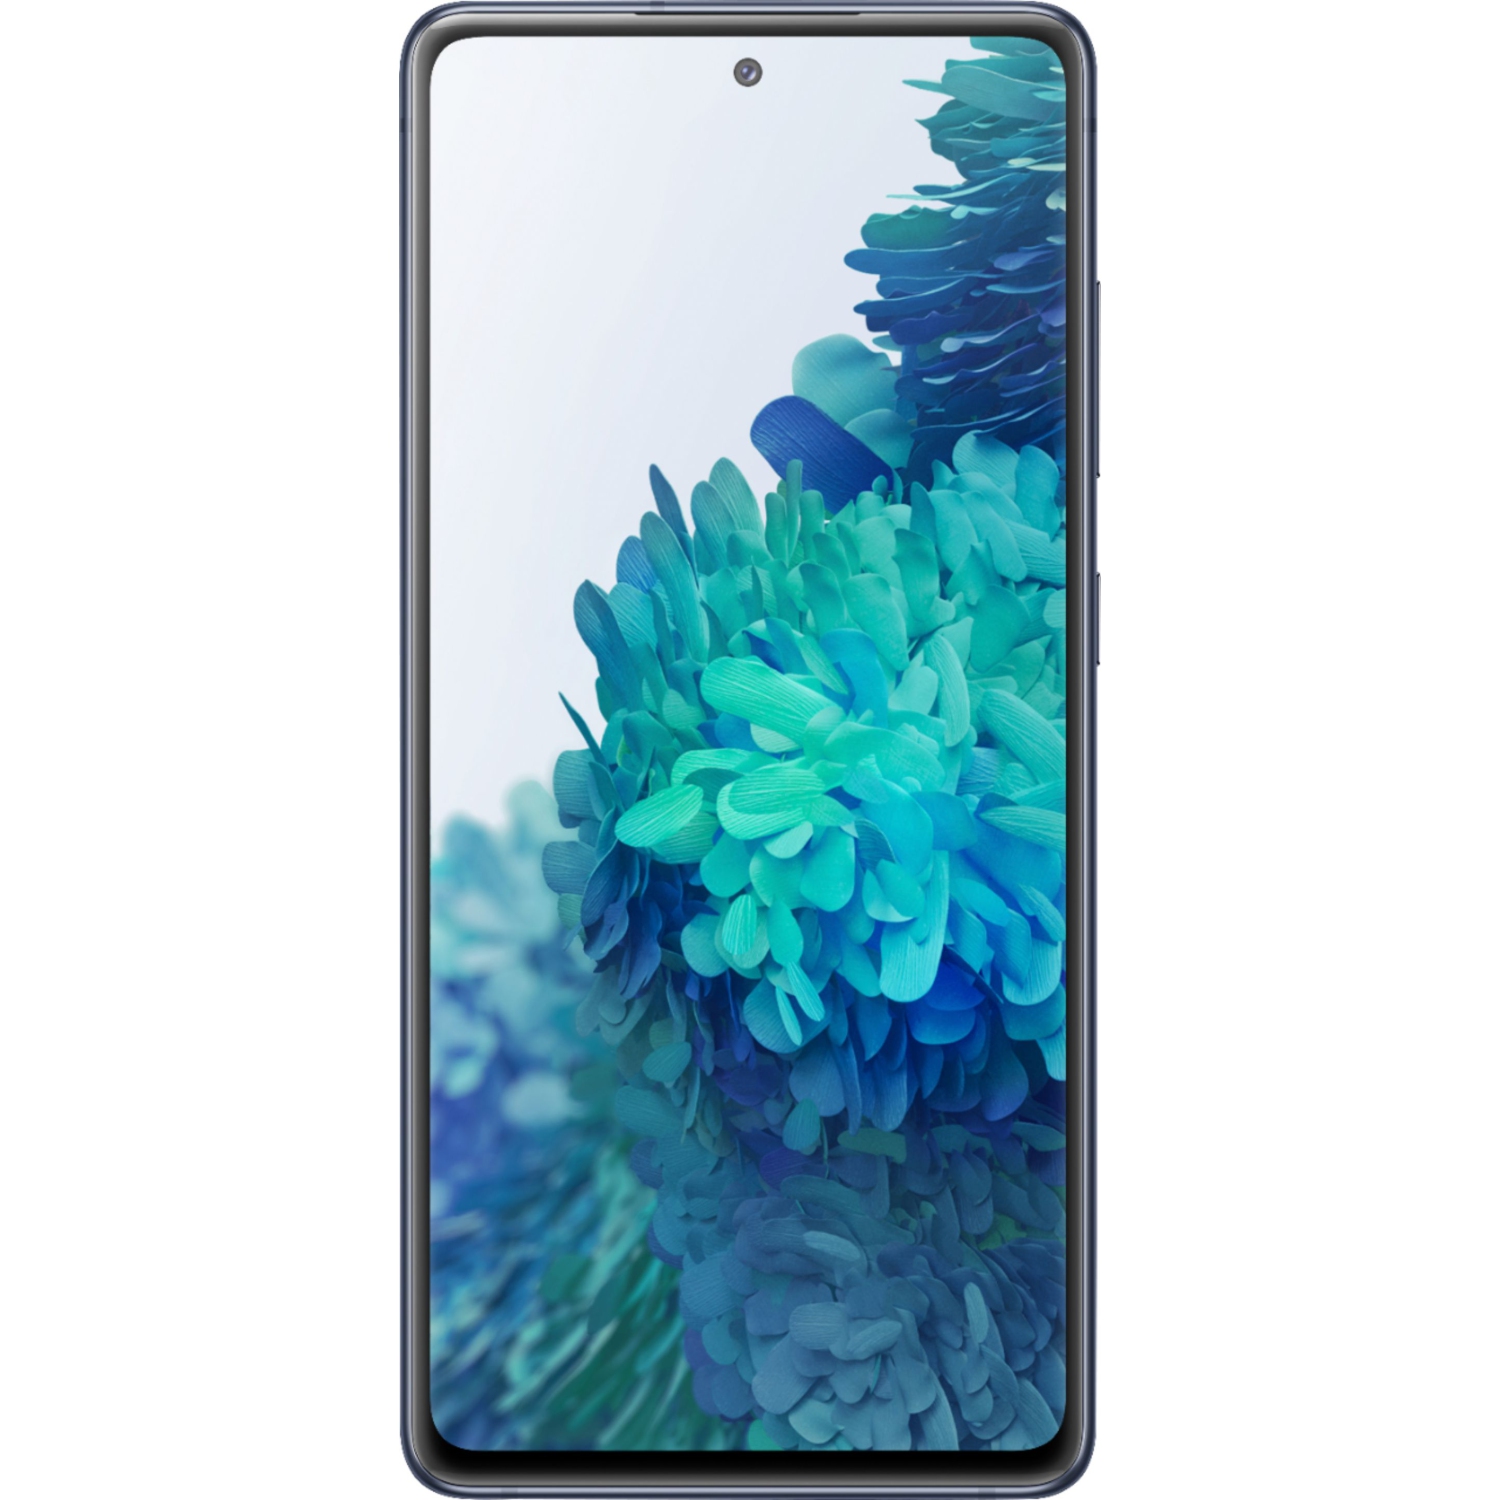 Samsung Galaxy S20 FE 5G 128GB - Cloud Navy - Unlocked - New Sealed